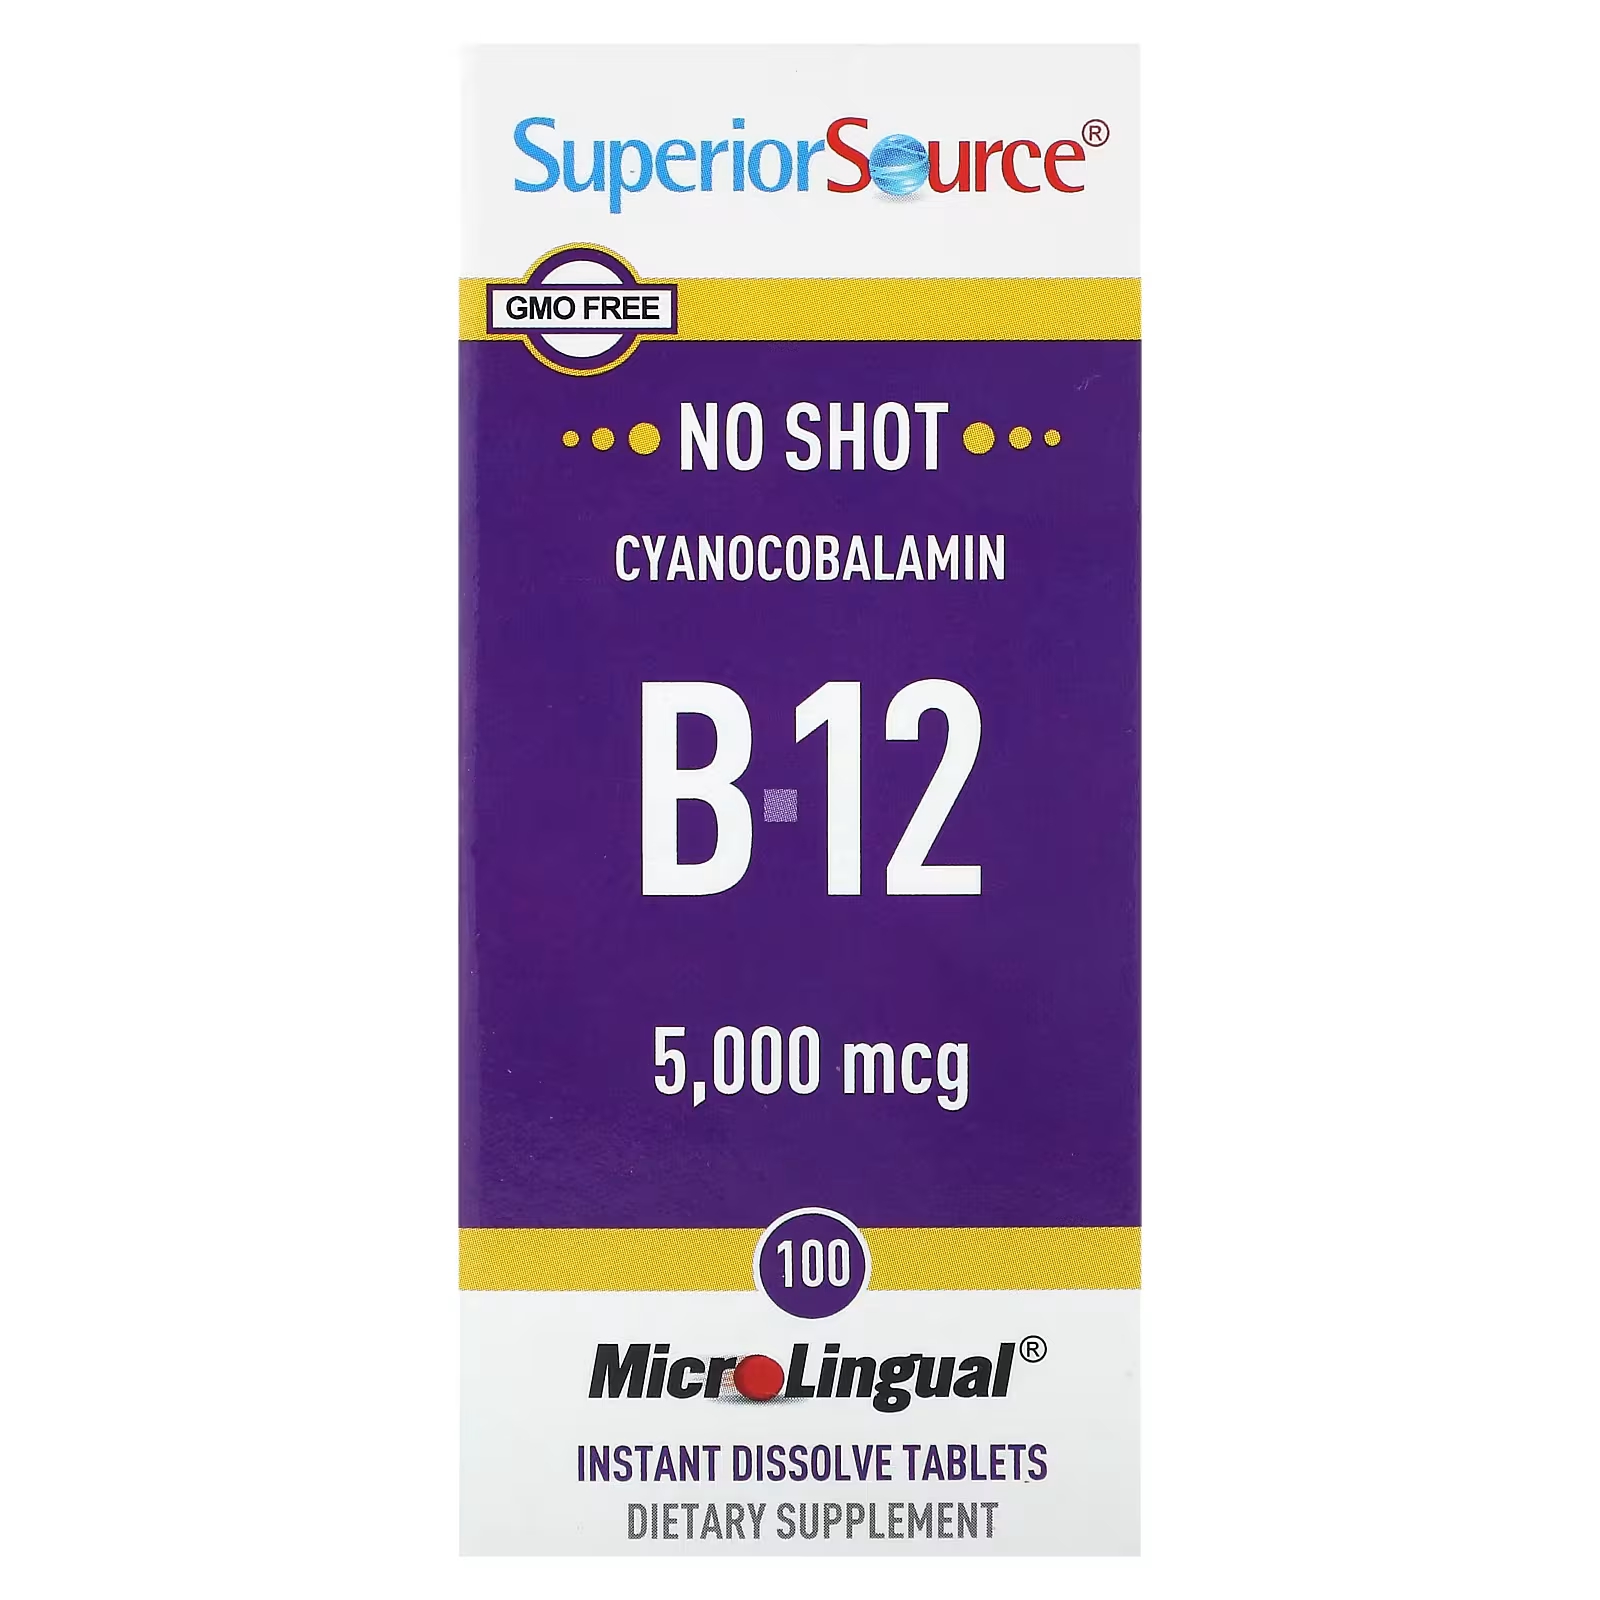 Пищевая добавка MicroLingual Superior Source B-12 цианокобаламин, 100 растворяющихся таблеток